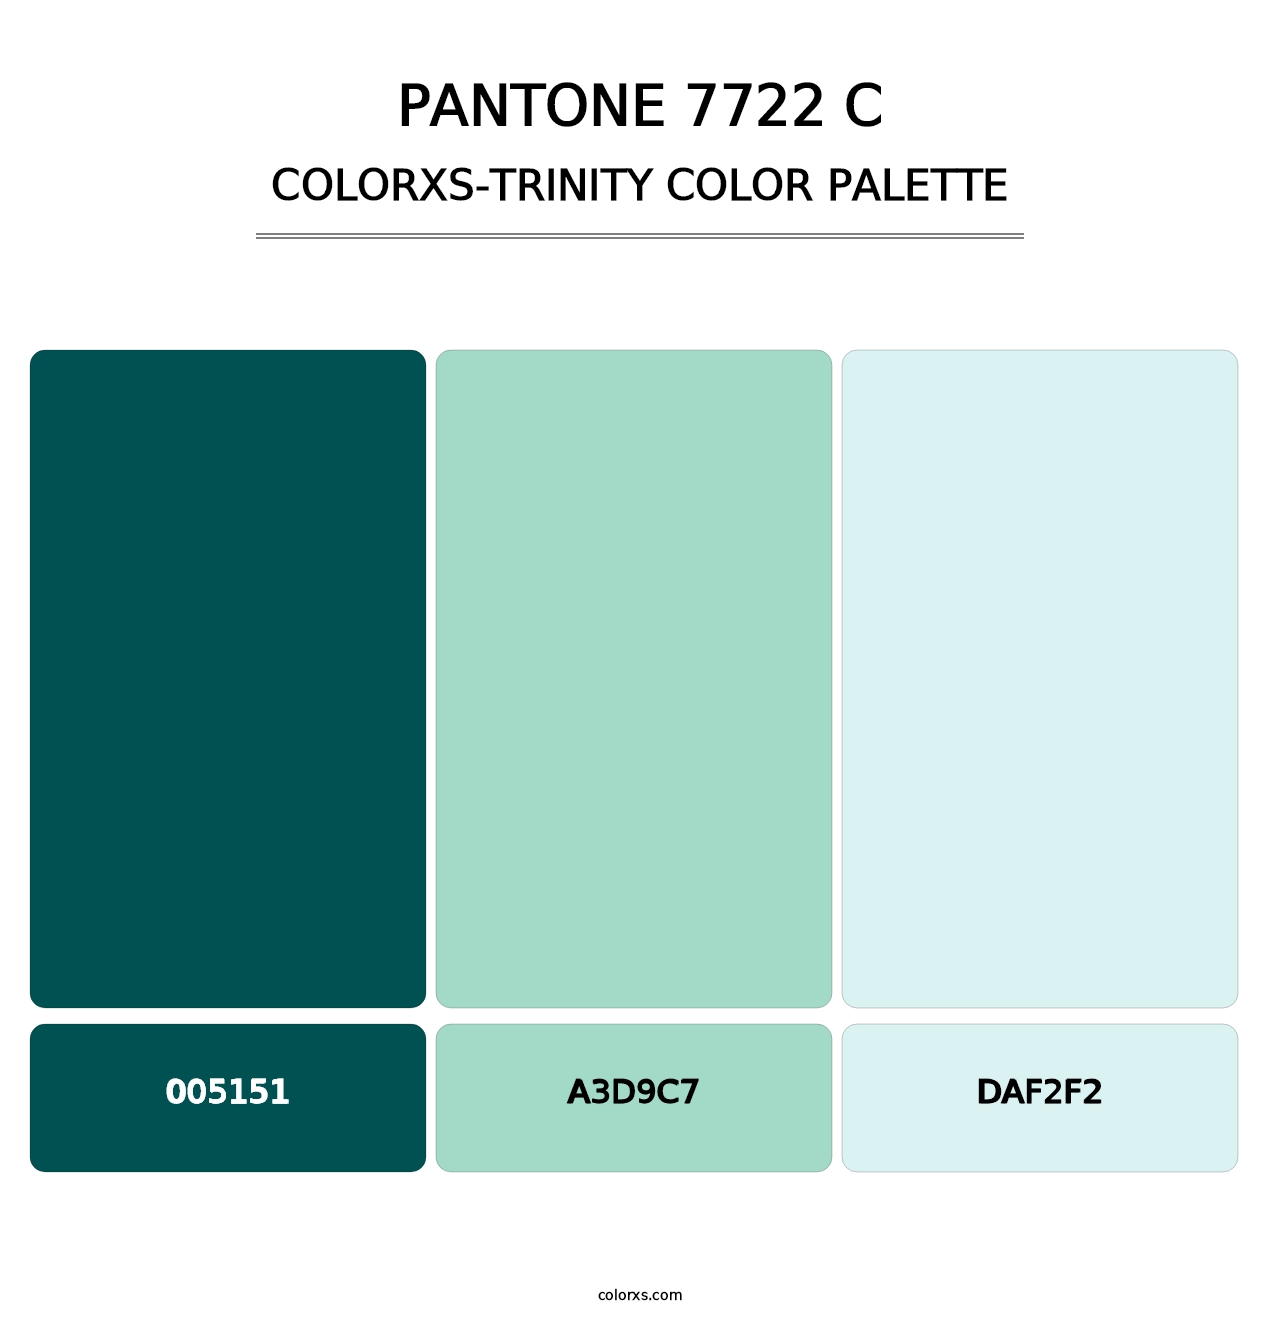 PANTONE 7722 C - Colorxs Trinity Palette